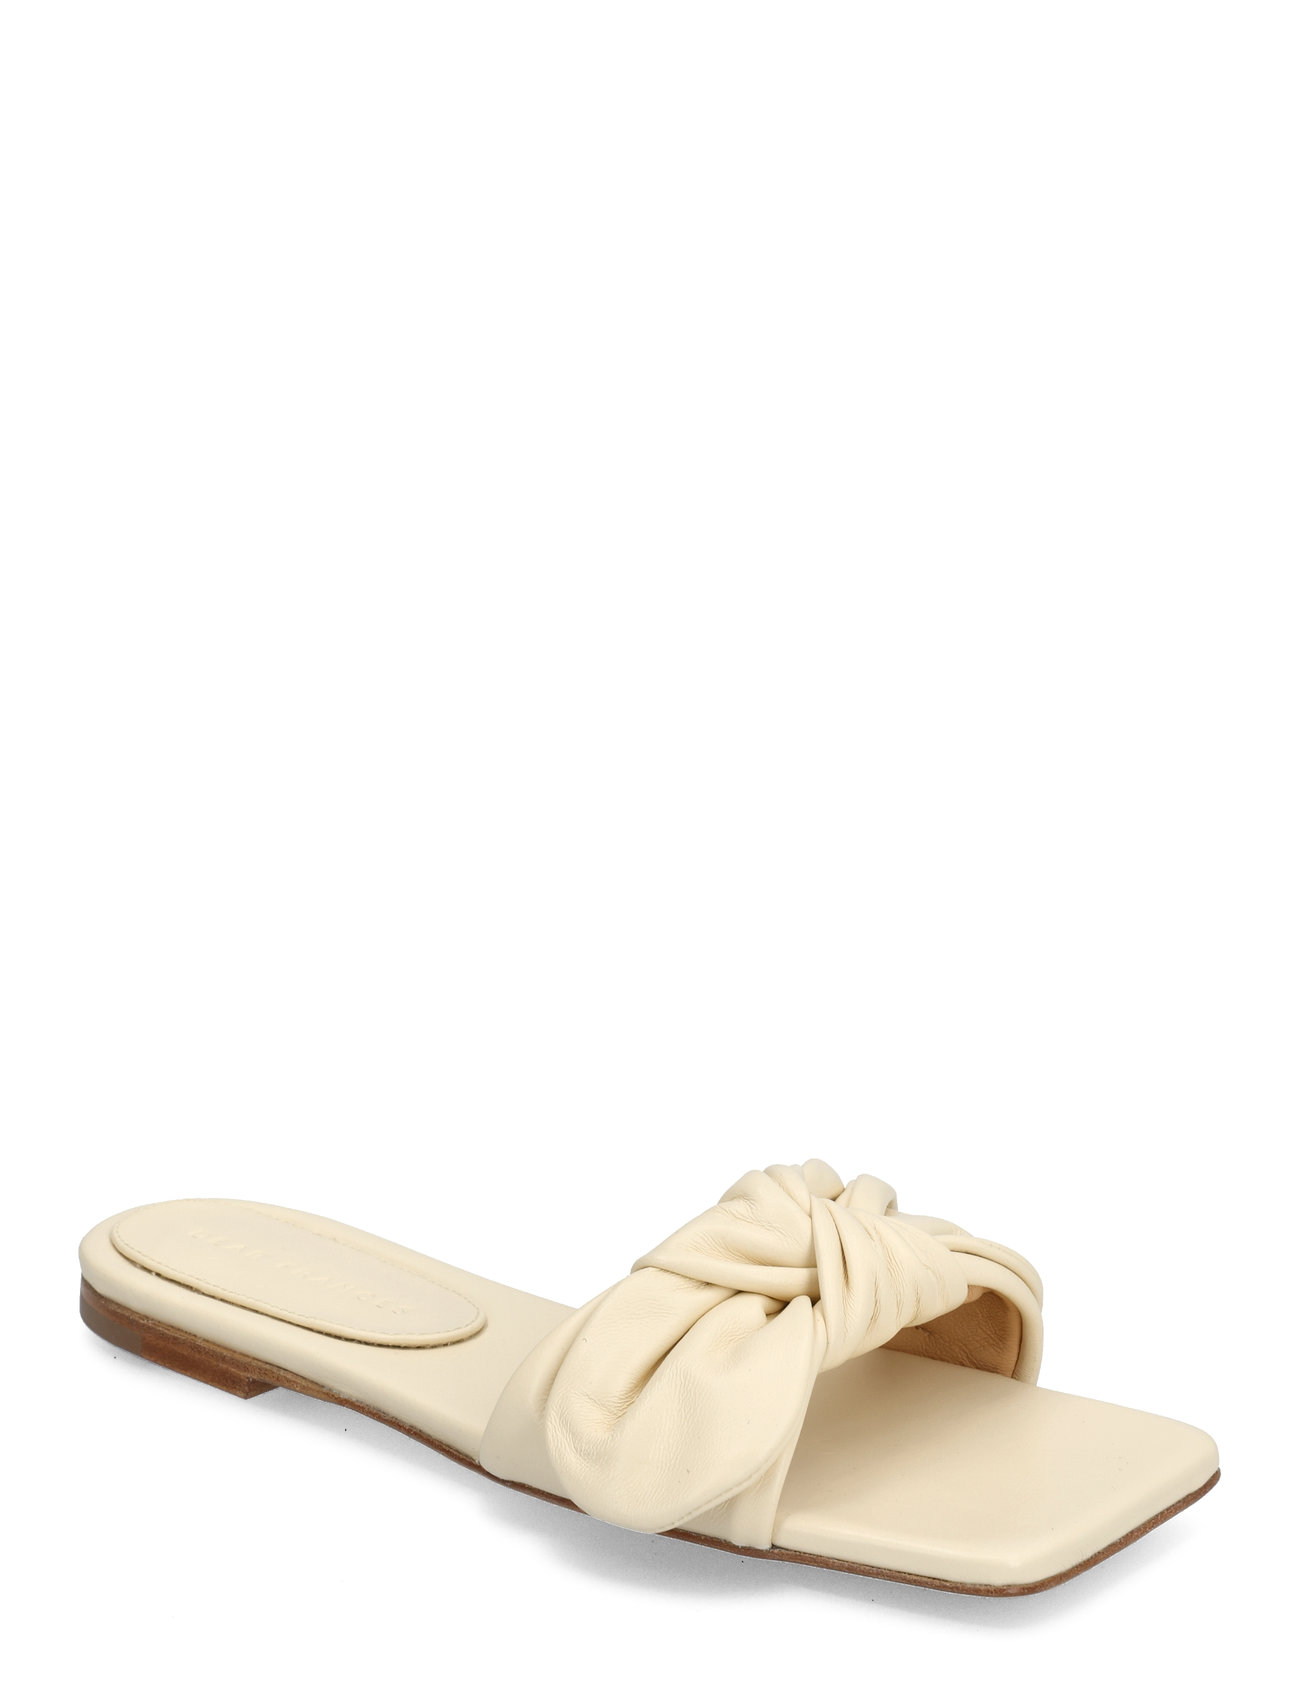 Knot Slide Designers Sandals Flat Cream DEAR FRANCES